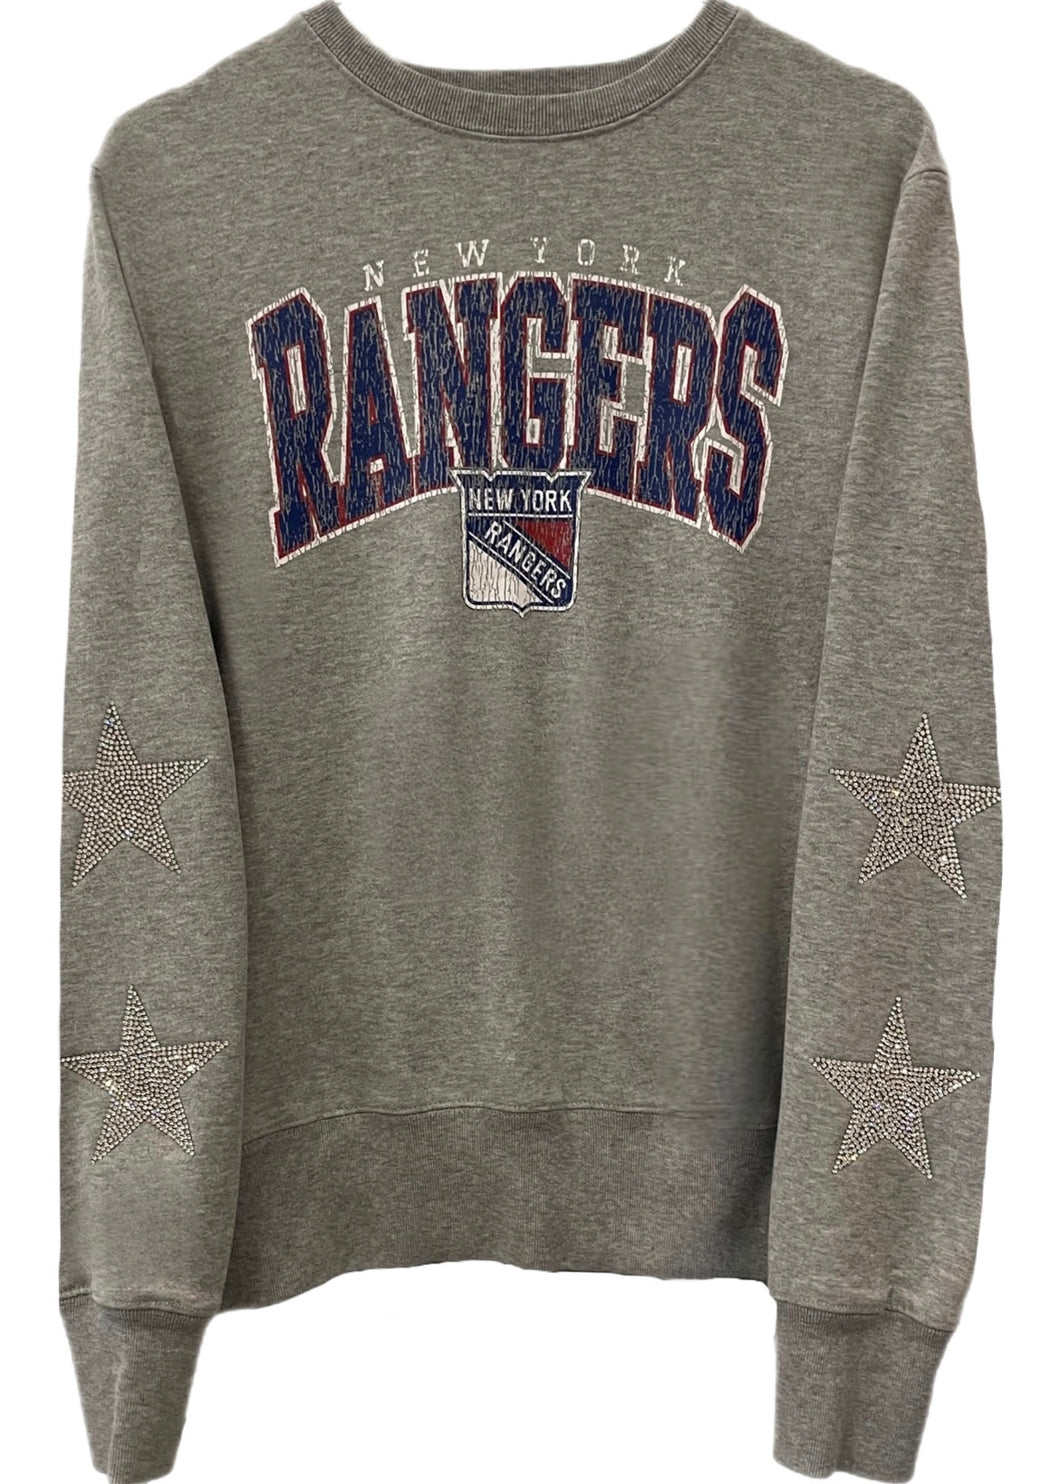 New York Rangers, NHL One of a KIND Vintage Sweatshirt with Crystal Stars Design